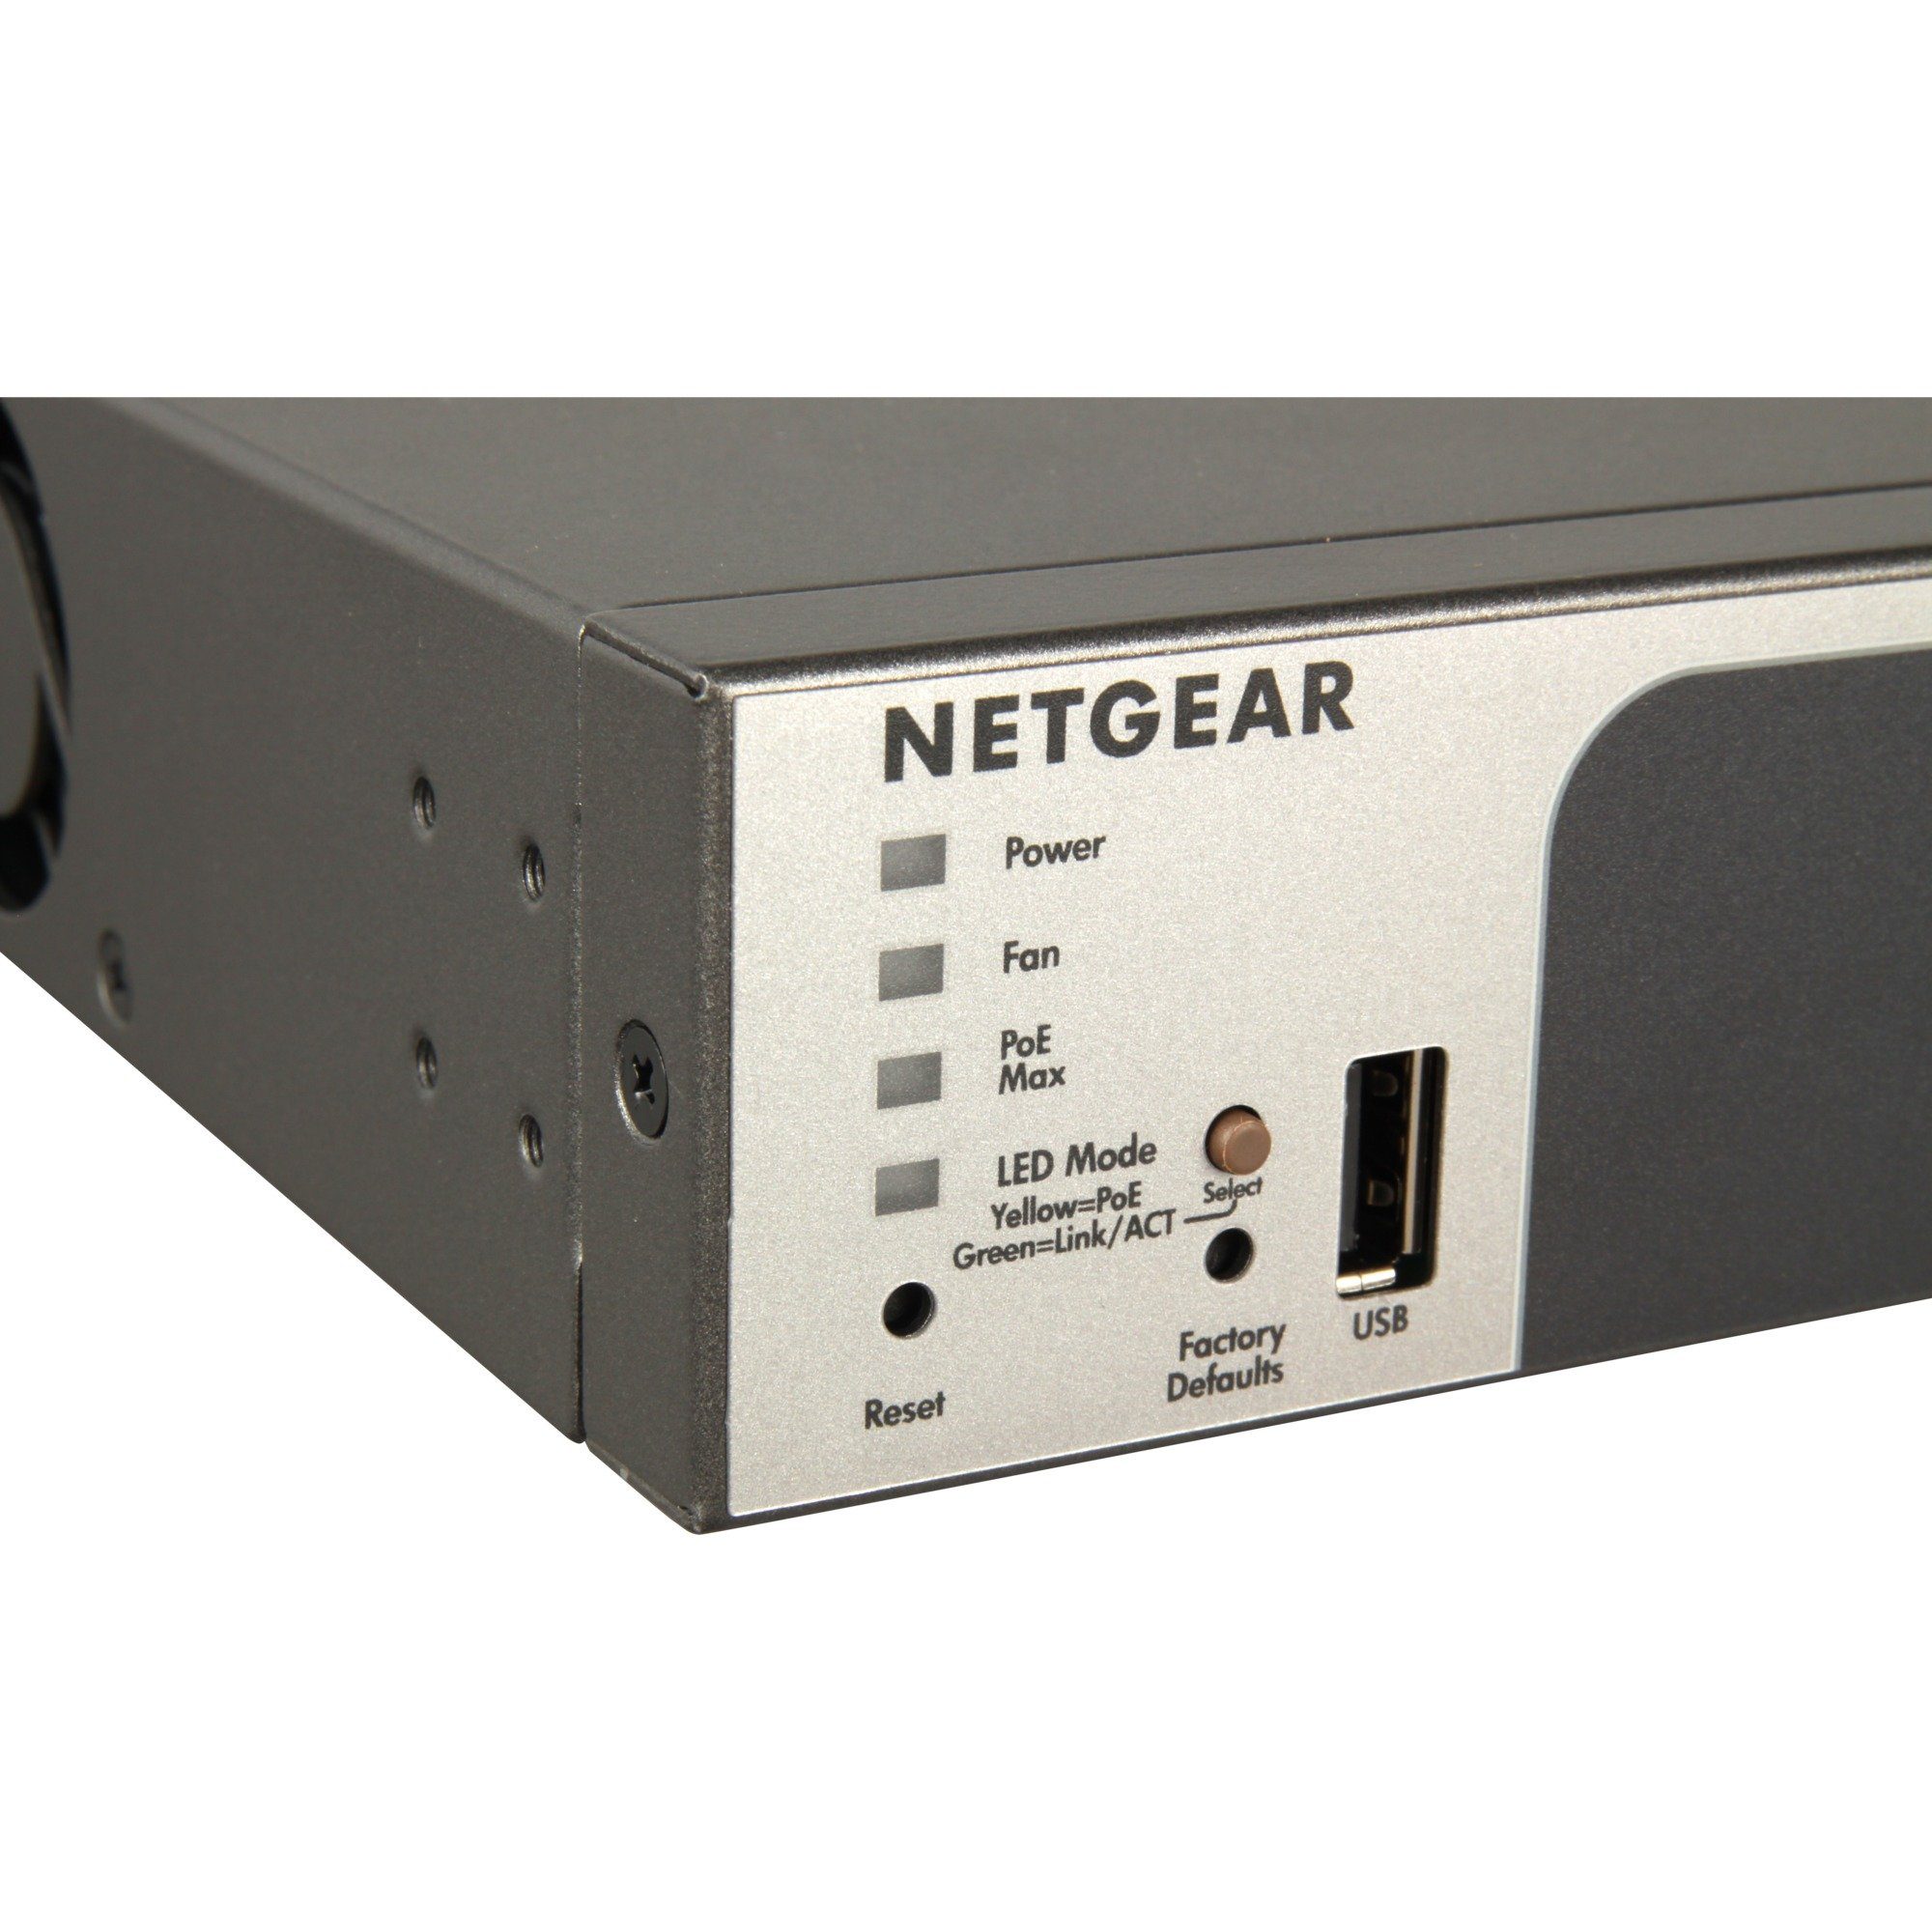 NETGEAR Netgear GS728TPv2, Switch Netzwerk-Switch